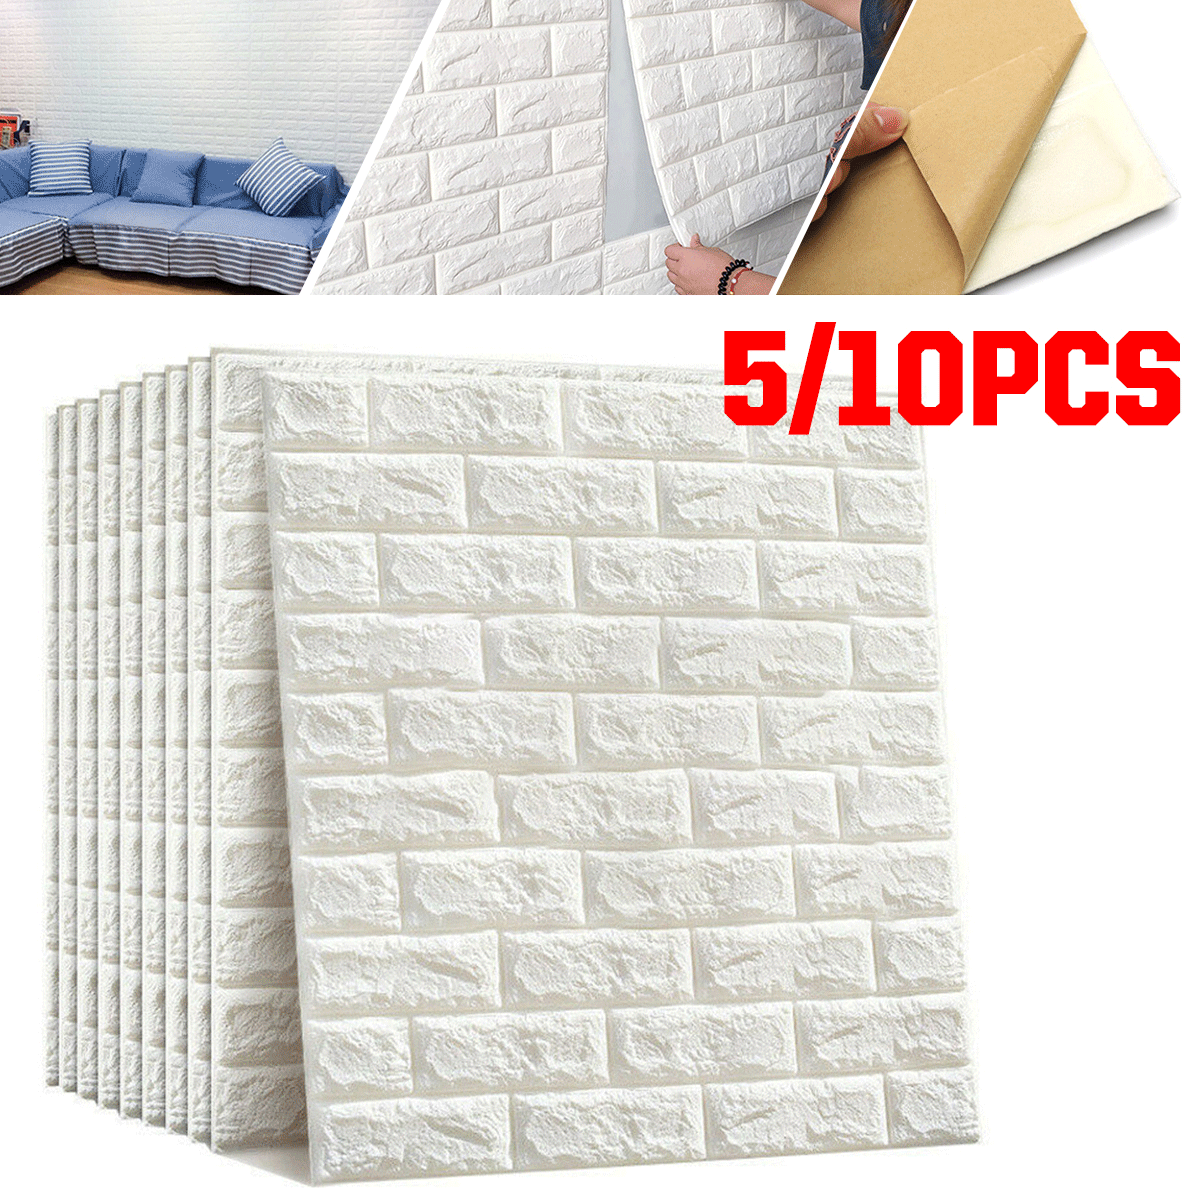 10Pcs 3D Waterproof Tile Brick Wall Sticker Self-adhesive Foam Panel Home Decor